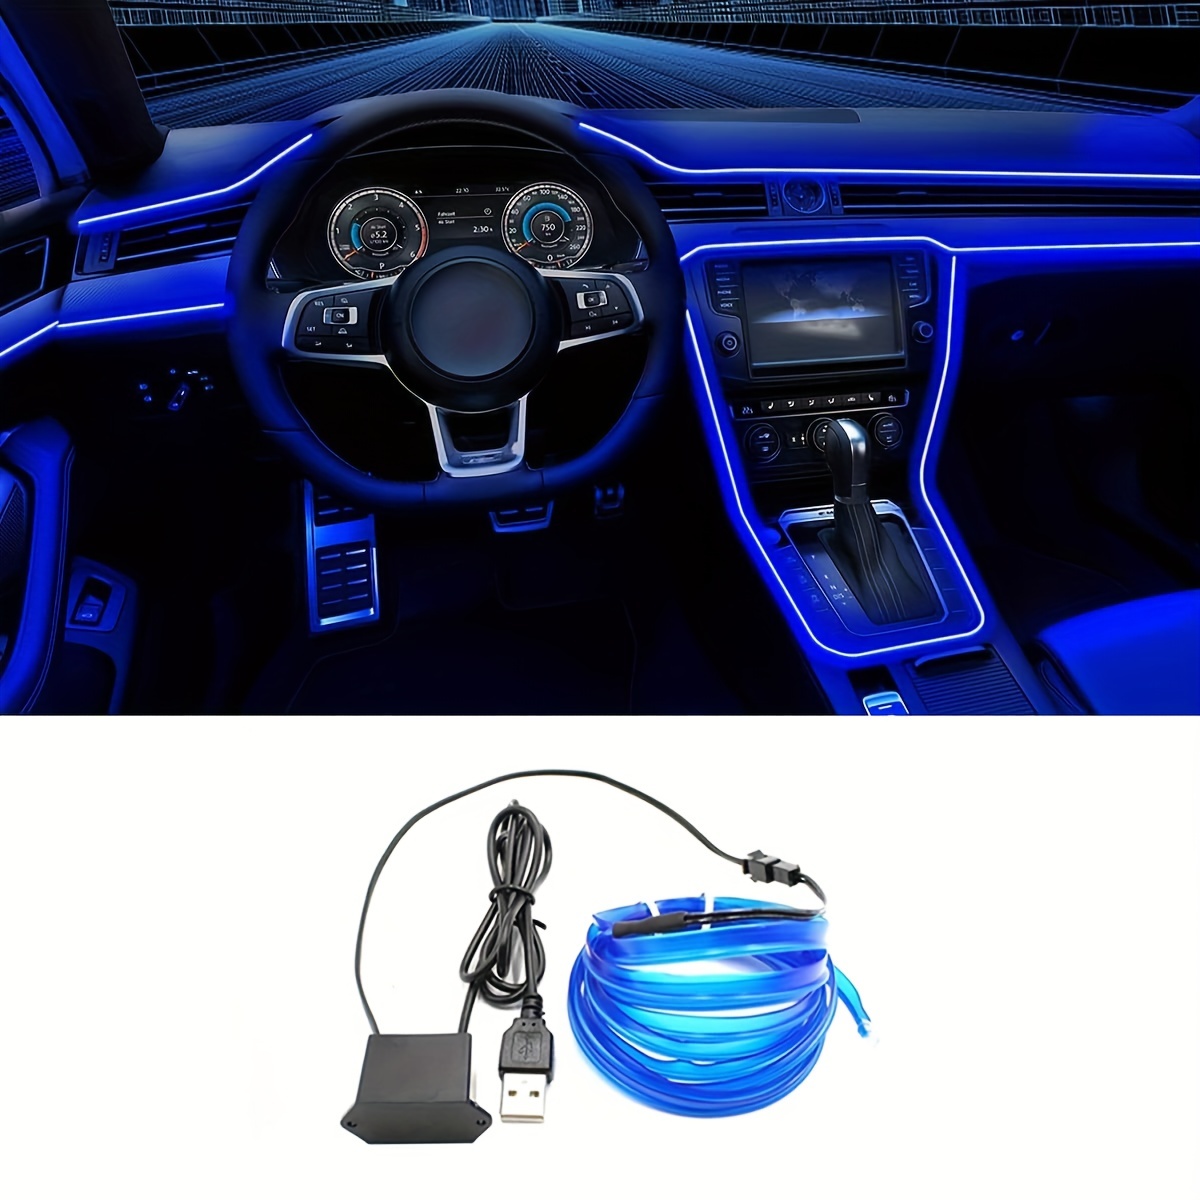 2M Car Interior Atmosphere Wire Auto Strip Light LED Decor Lamp Accessories